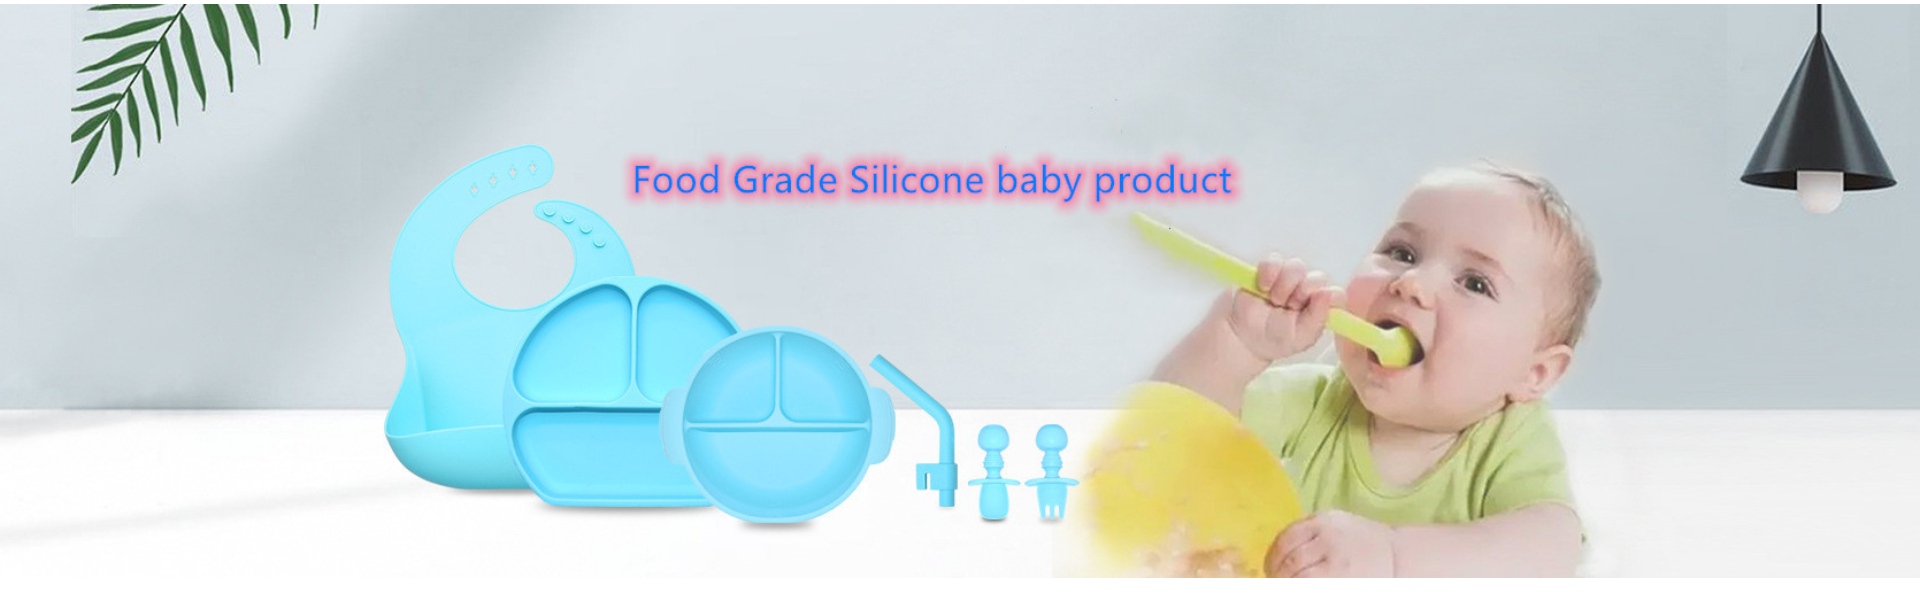 keukengerei voor siliconen, siliconen-ijs, siliconen-baby product,Huizhou Calipolo accessory Ltd